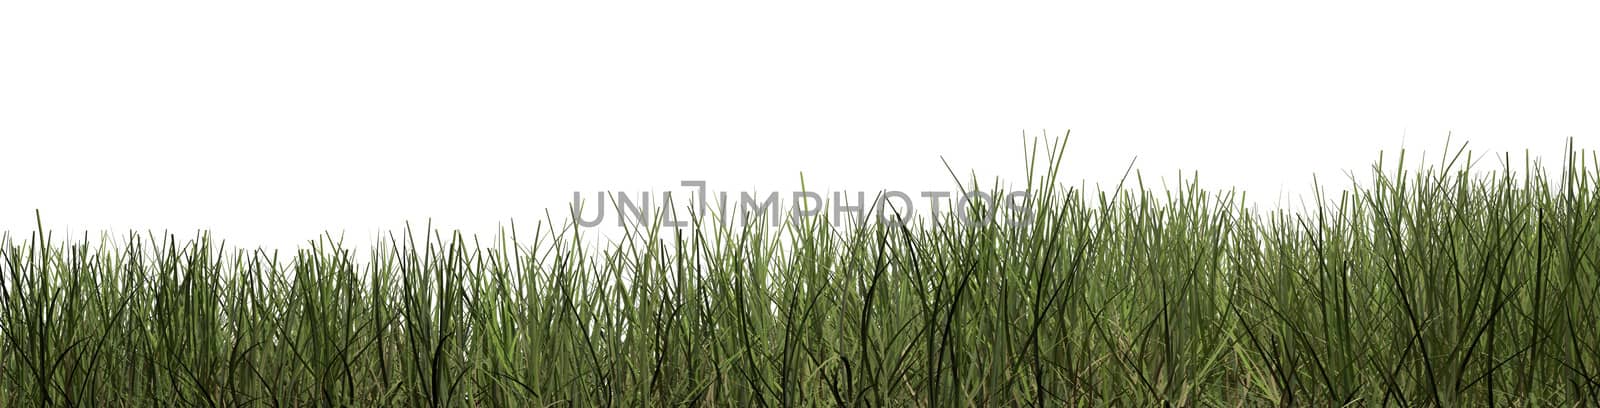 Green grass background by vitanovski